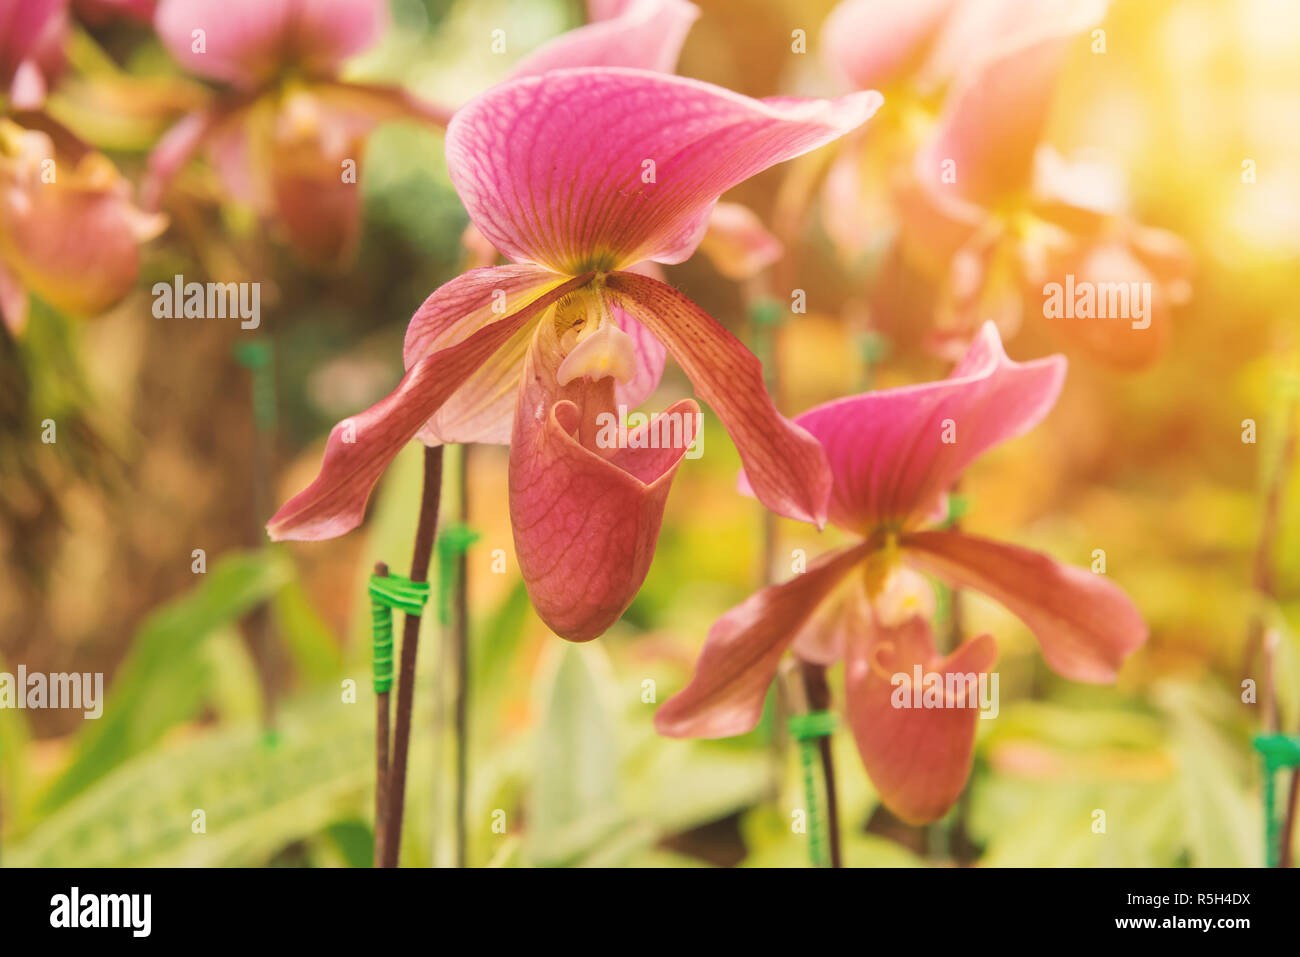 colorful of lady's slipper orchid in Beautiful garden (Paphiopedilum Callosum) Stock Photo